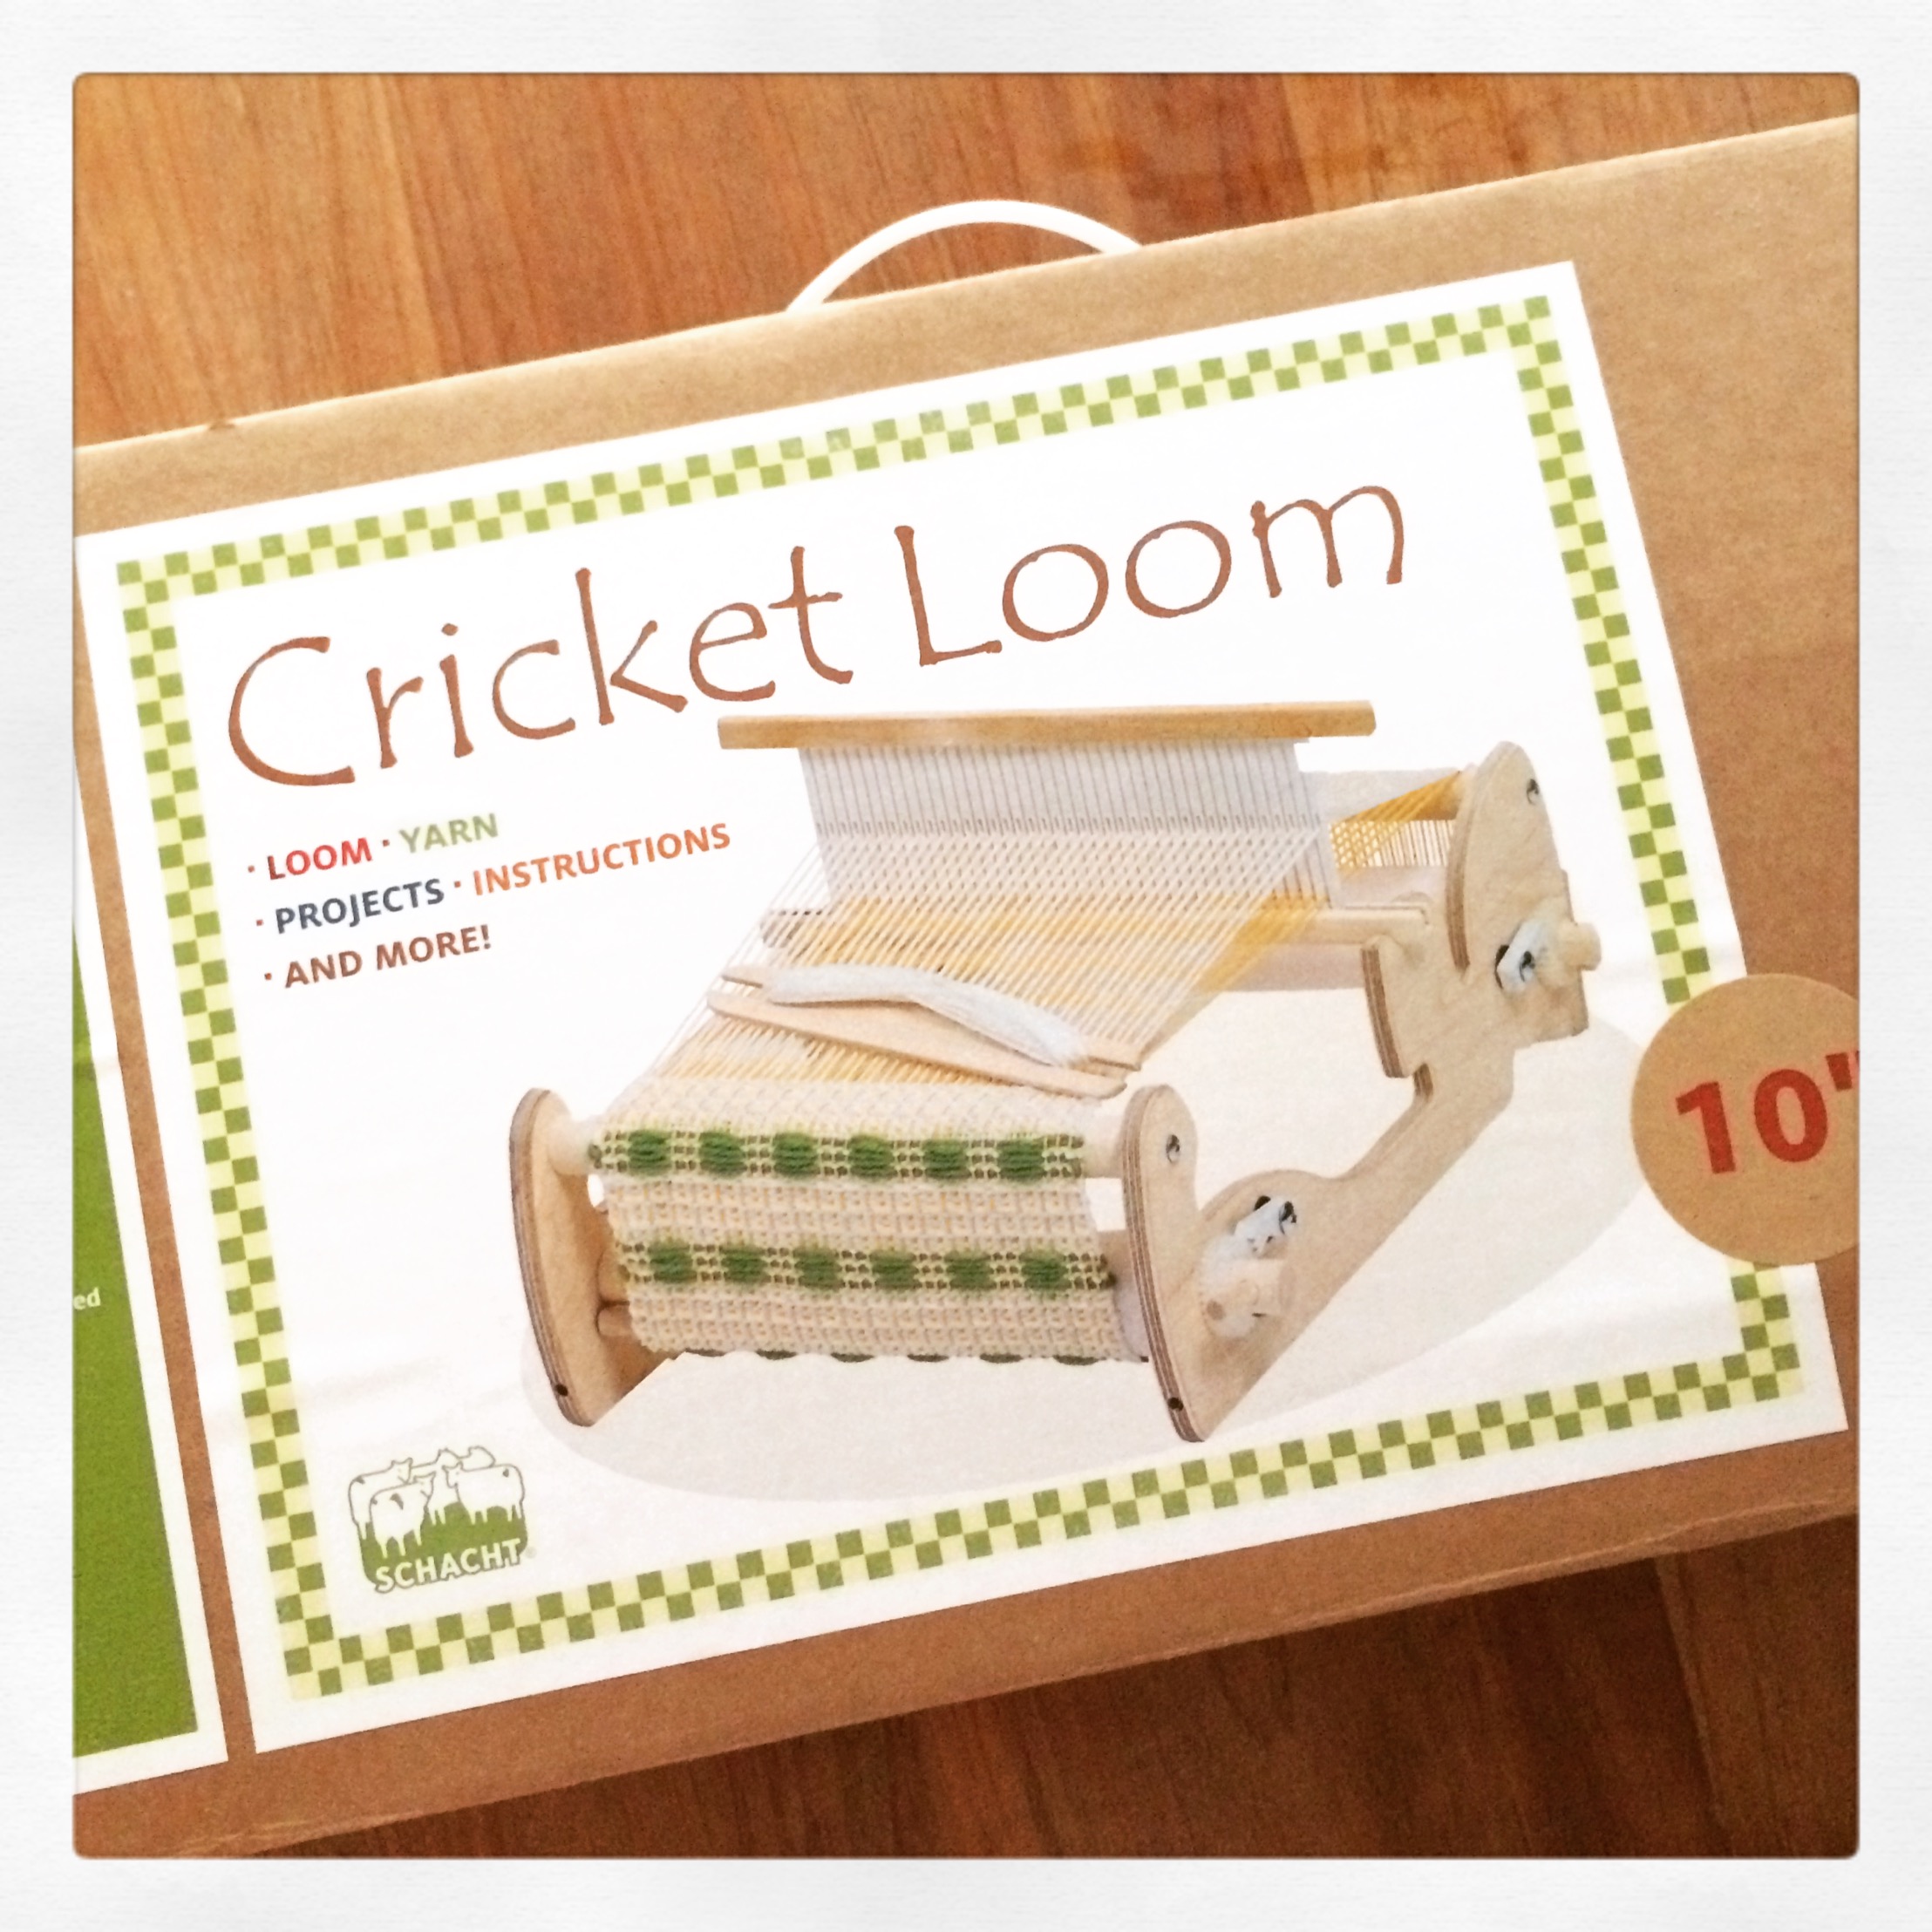 New 10" Cricket Loom! #weaving